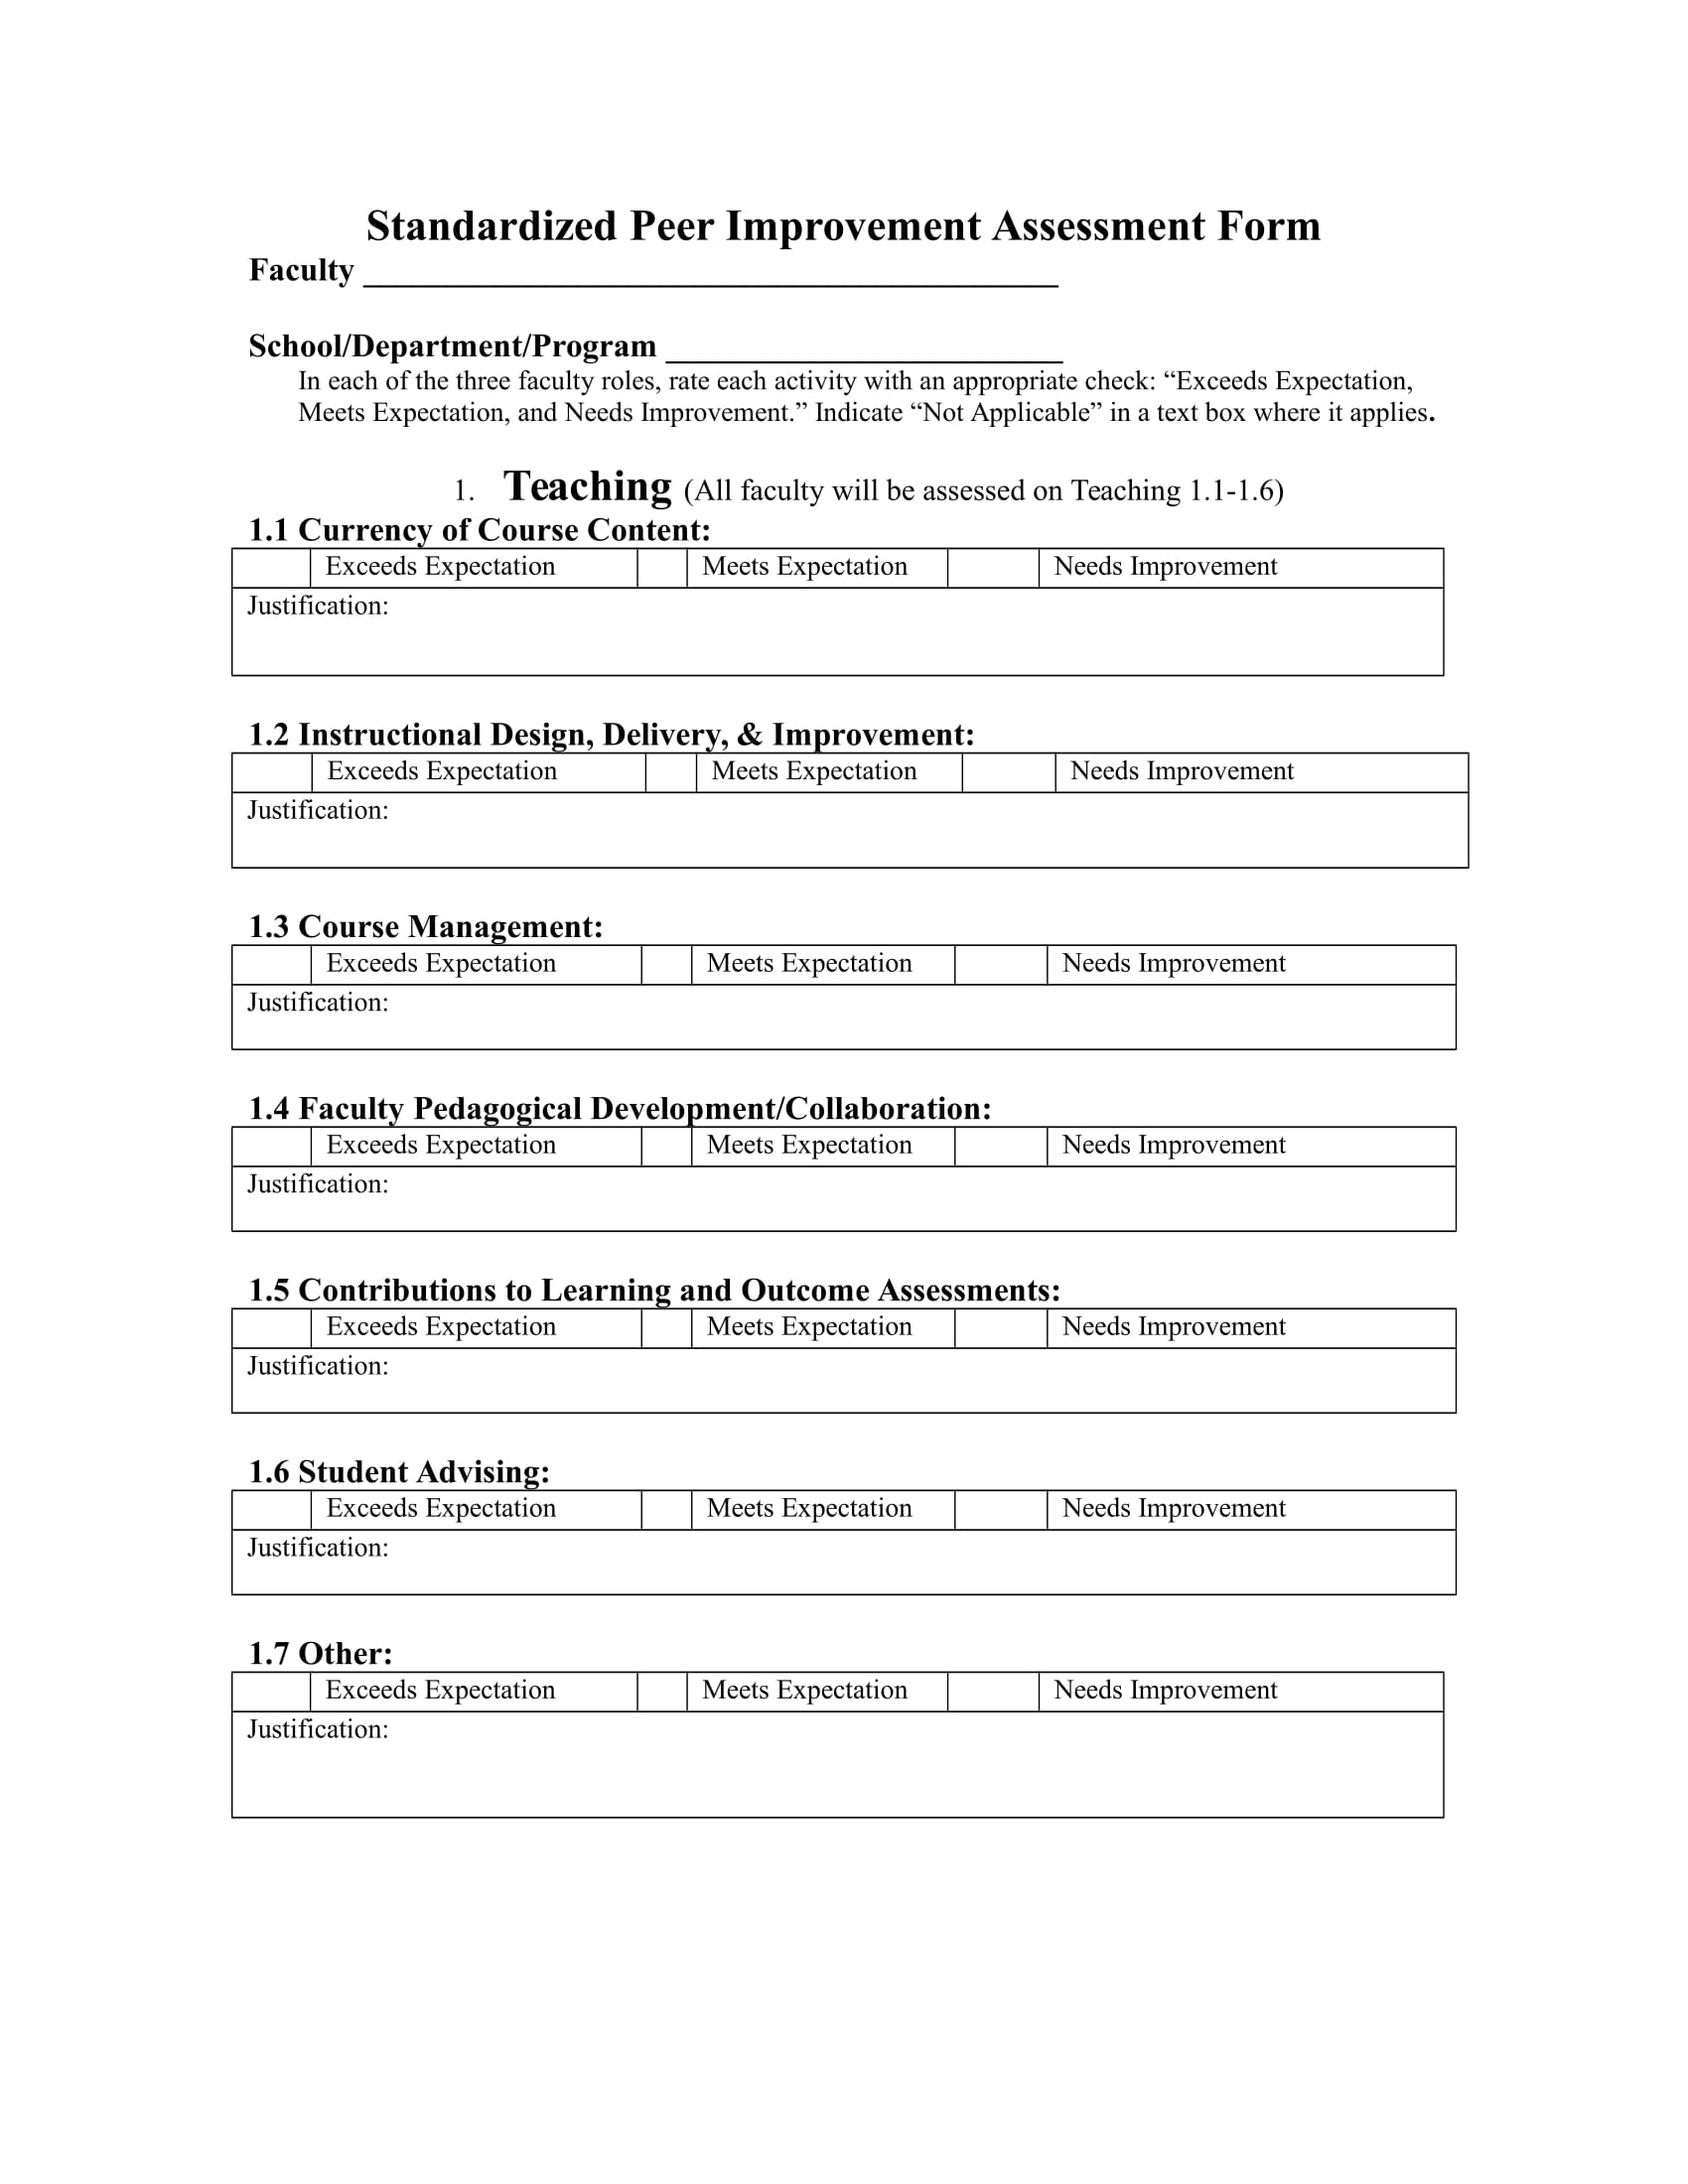 peer improvement assessment form 1